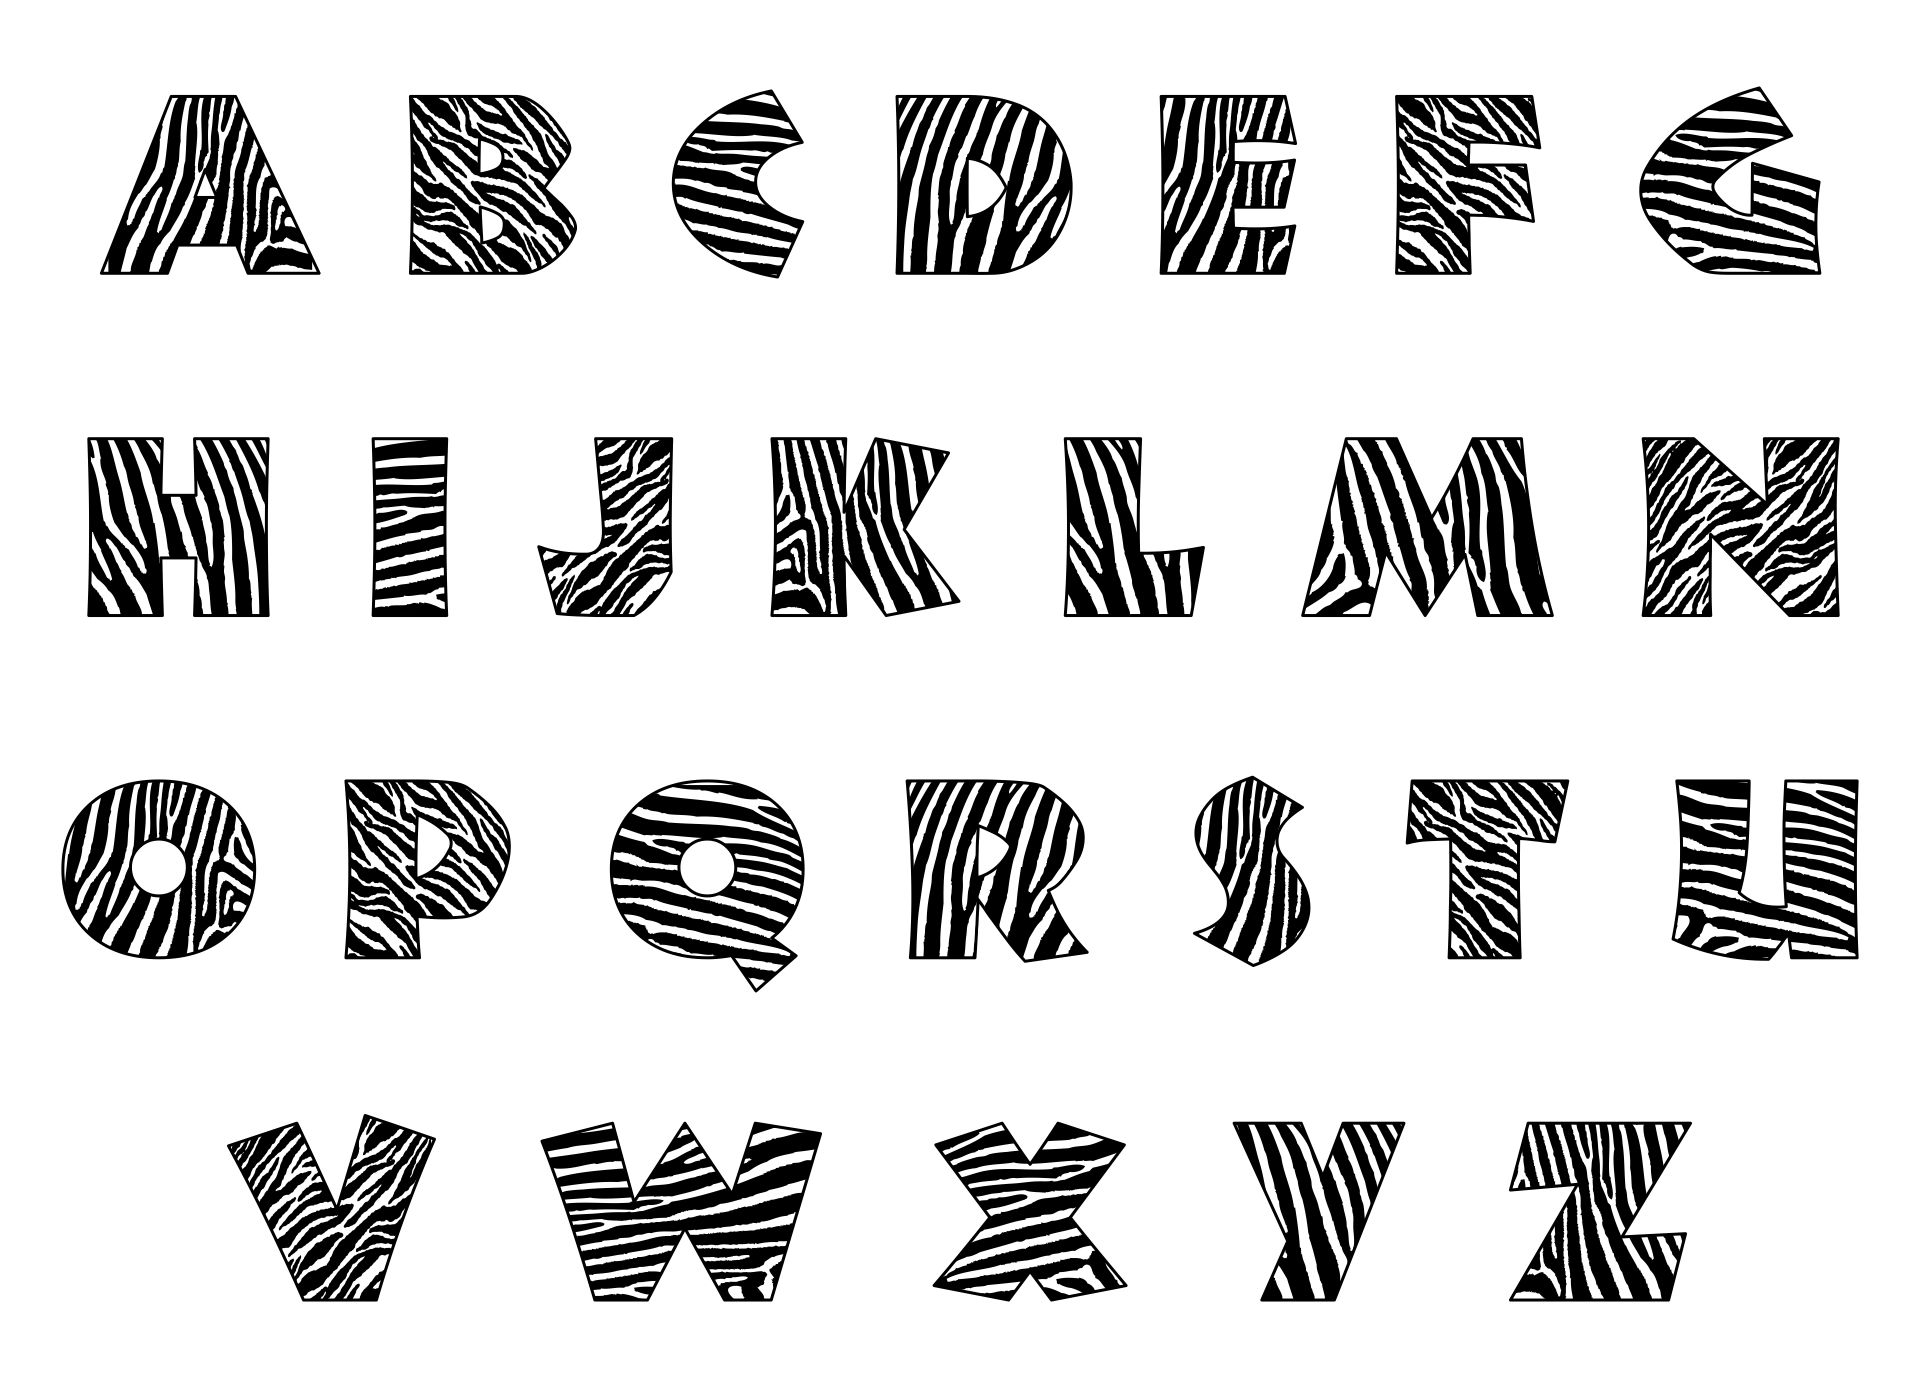 Zebra Print Font Free